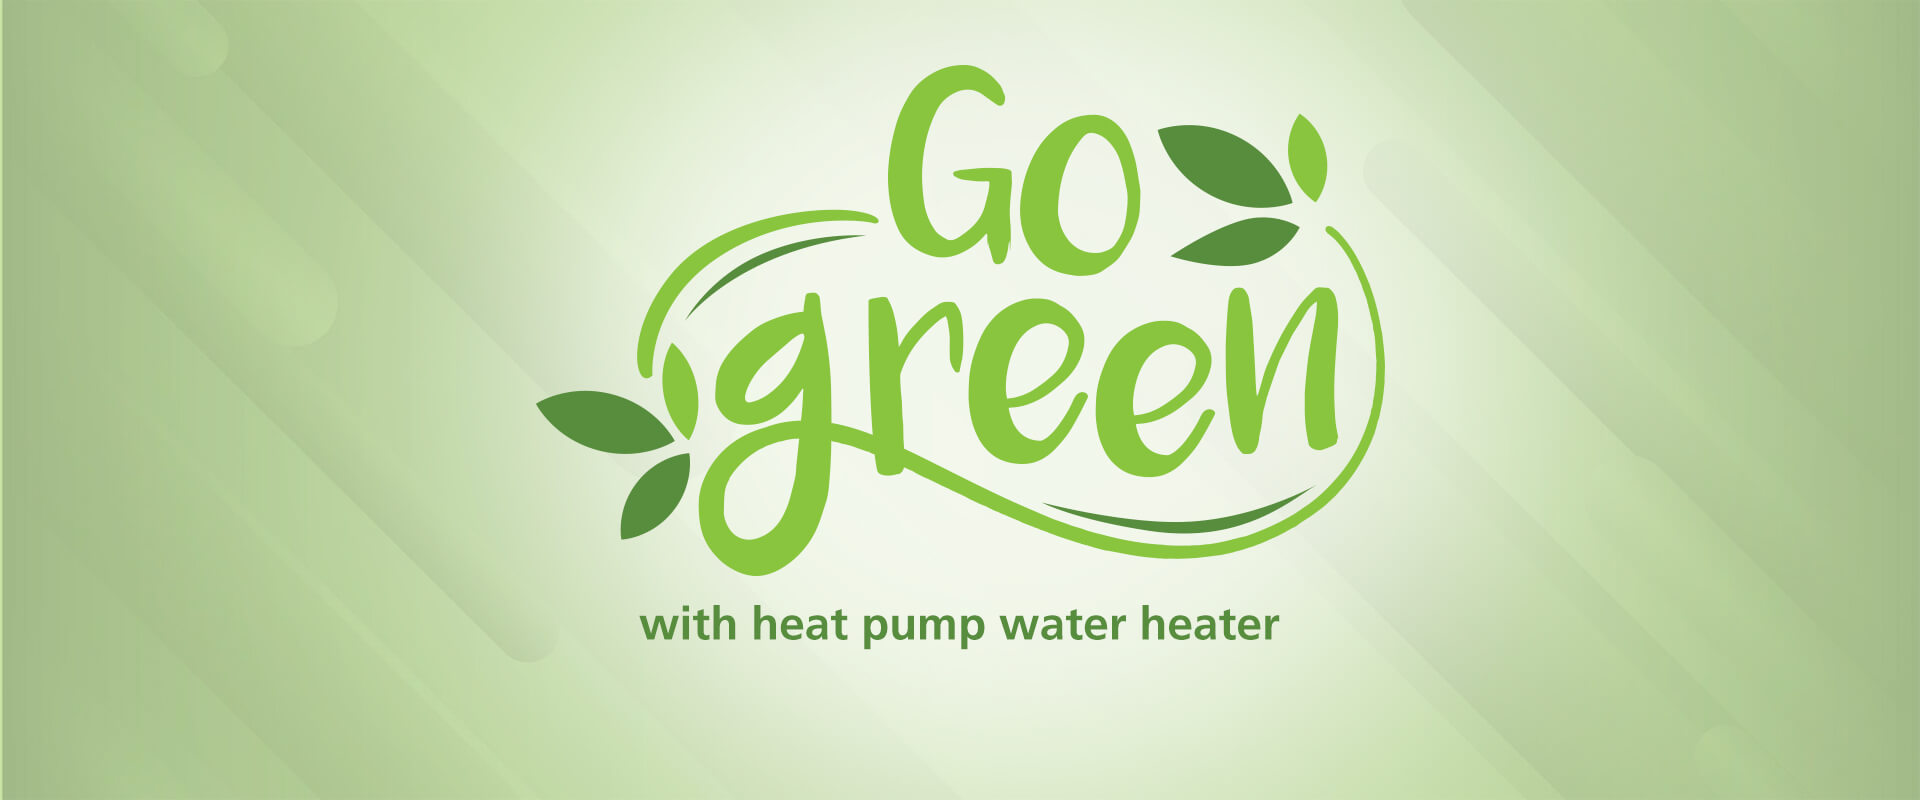 Energy Saving Heat Pump Water Heater in India